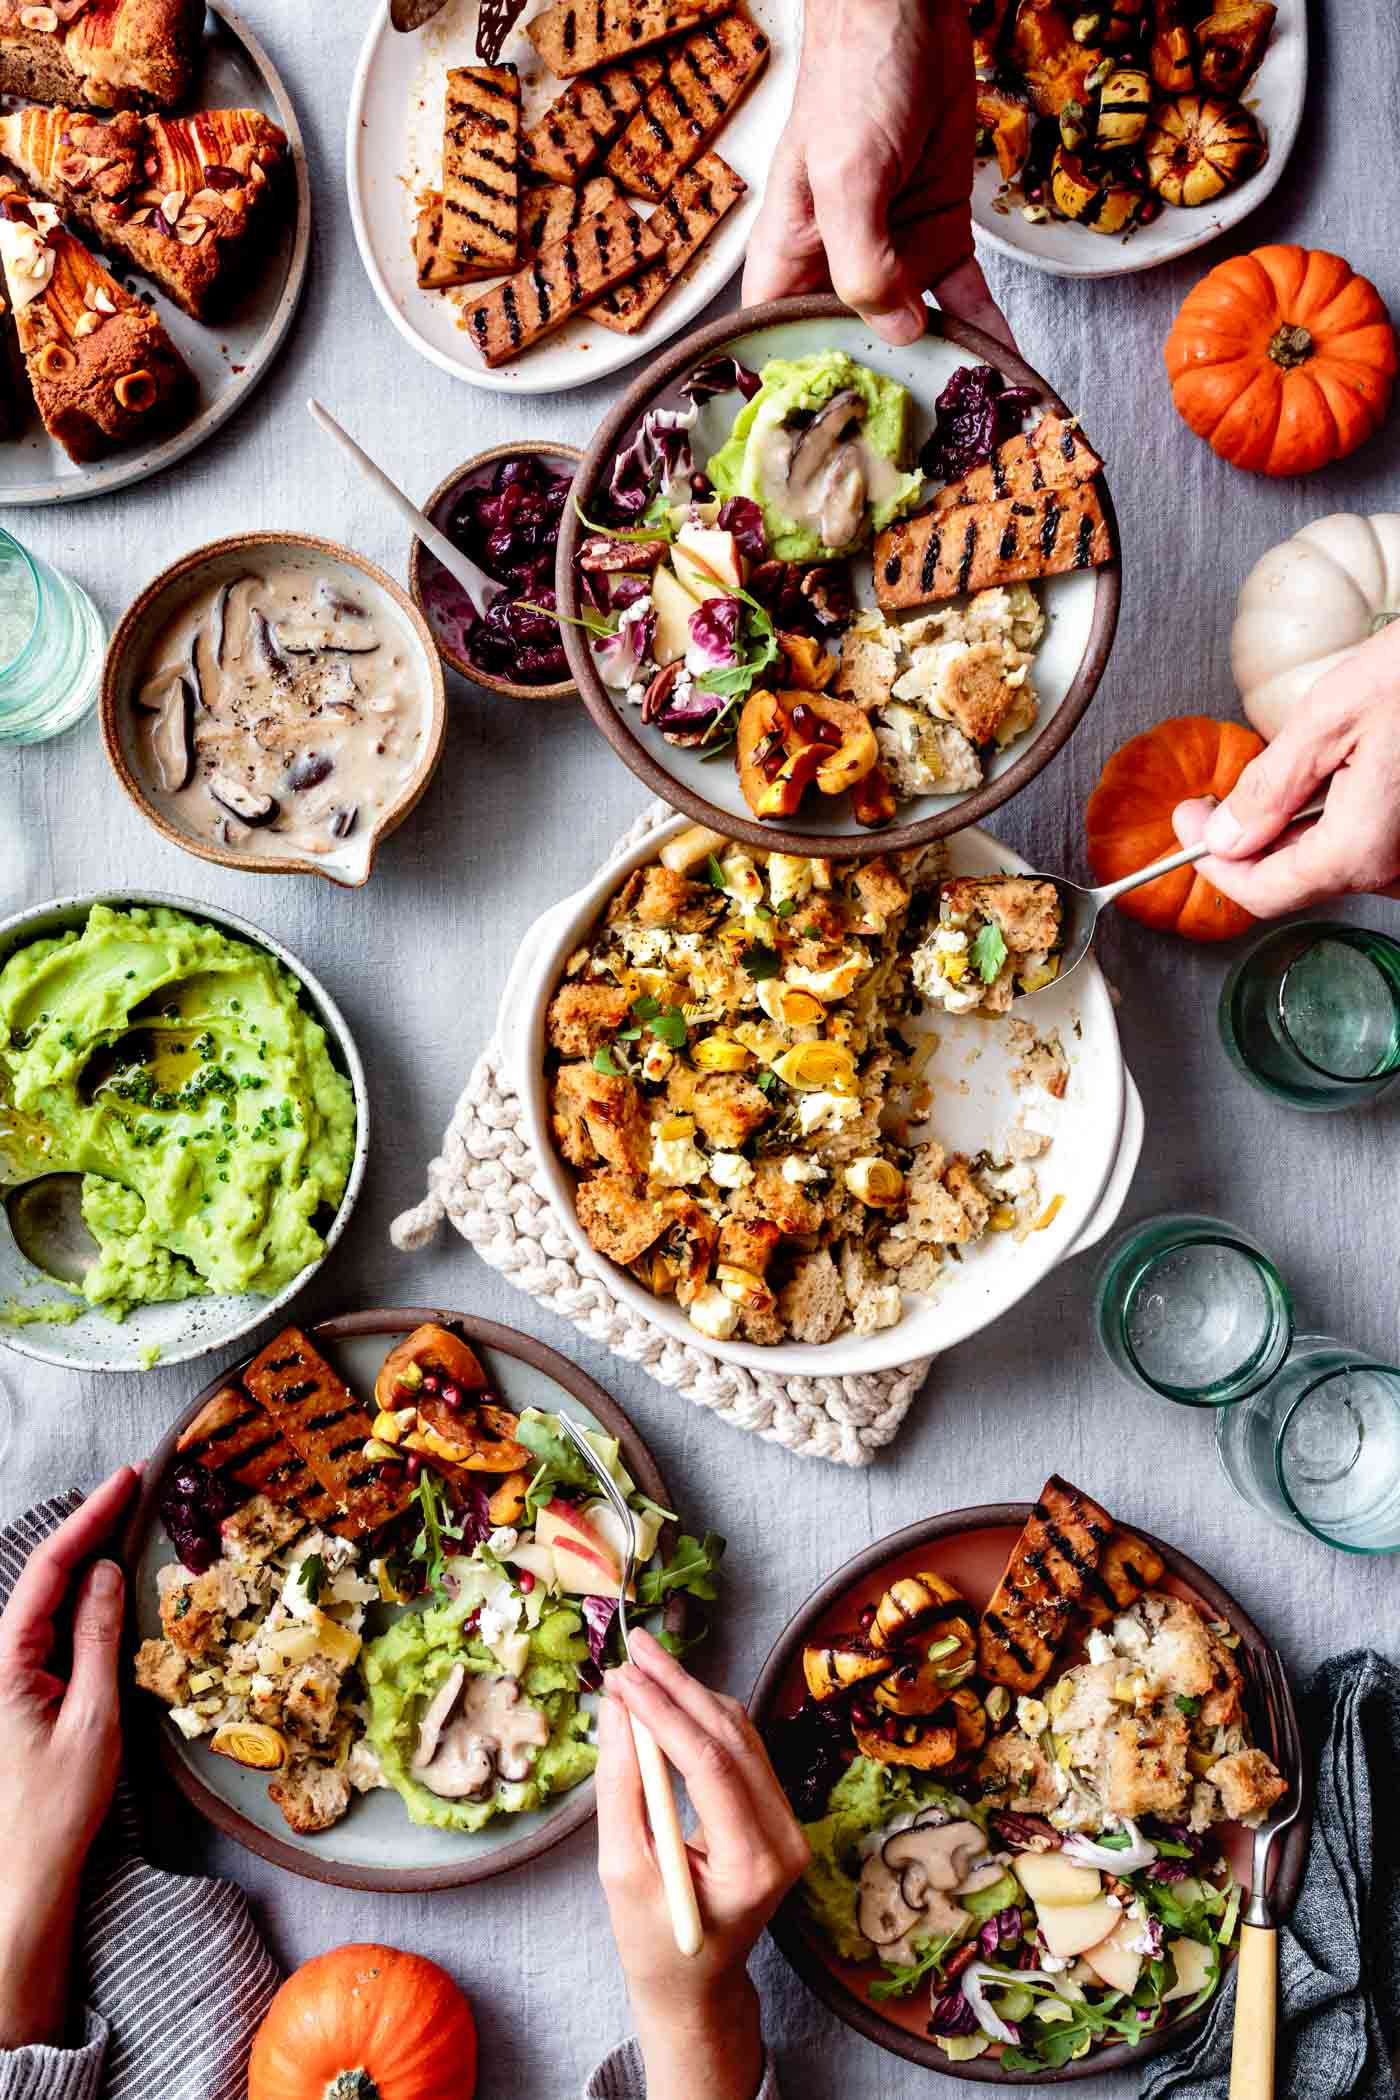 Gourmet Vegetarian Thanksgiving Recipes
 Ve arian Gluten Free Thanksgiving Recipes • The Bojon